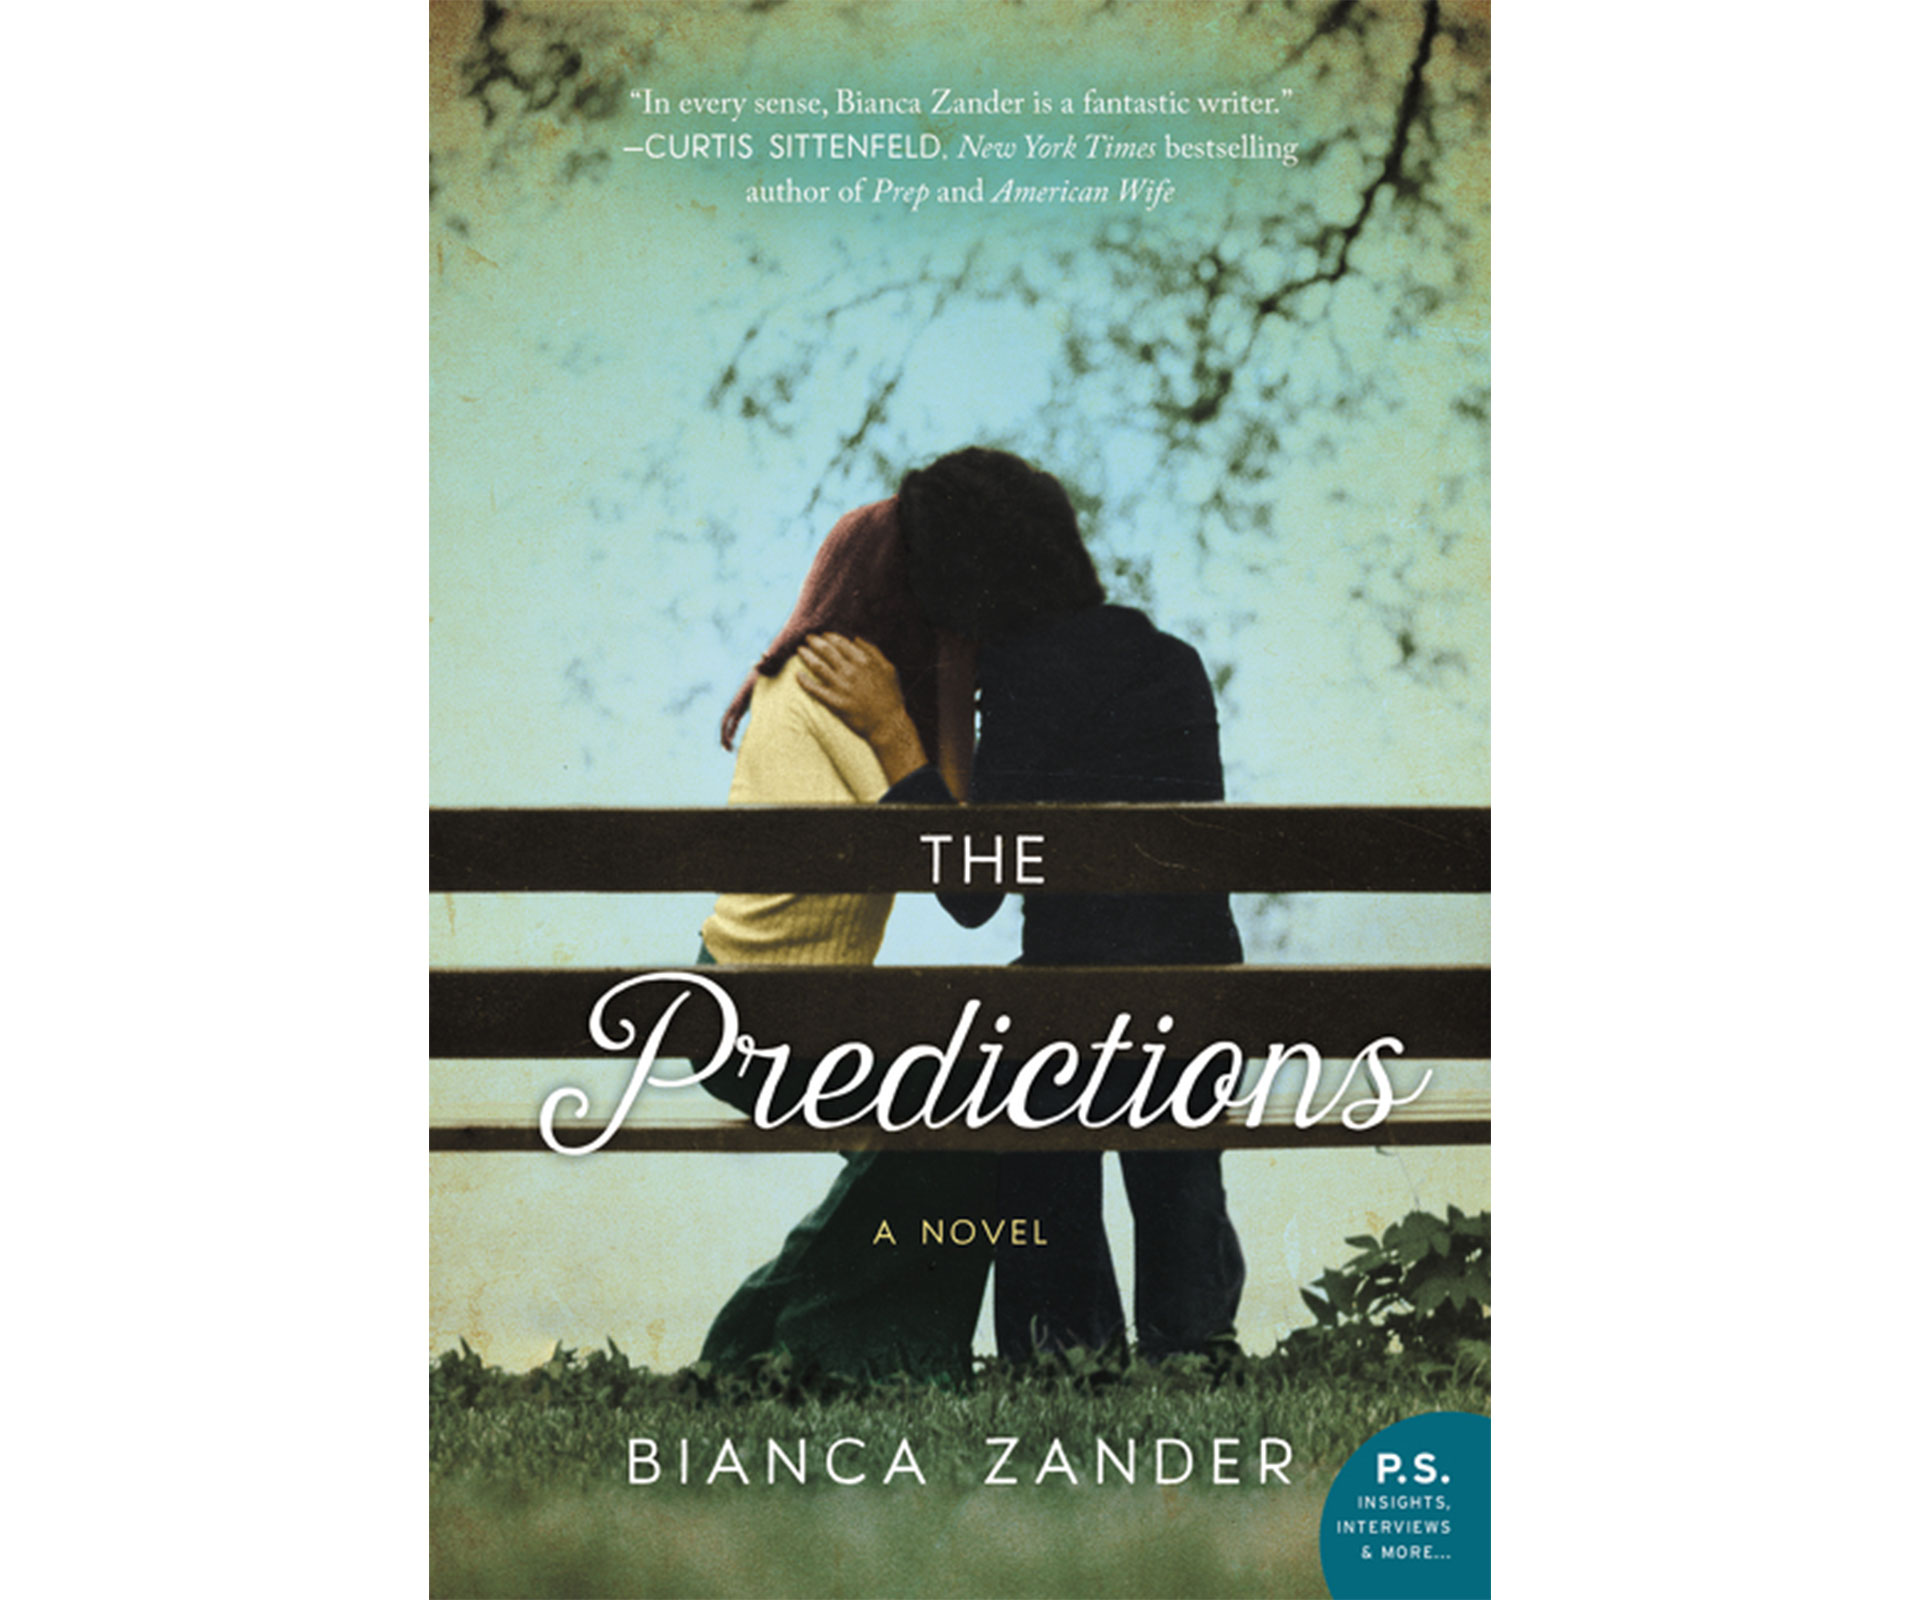 The Predictions by Bianca Zander